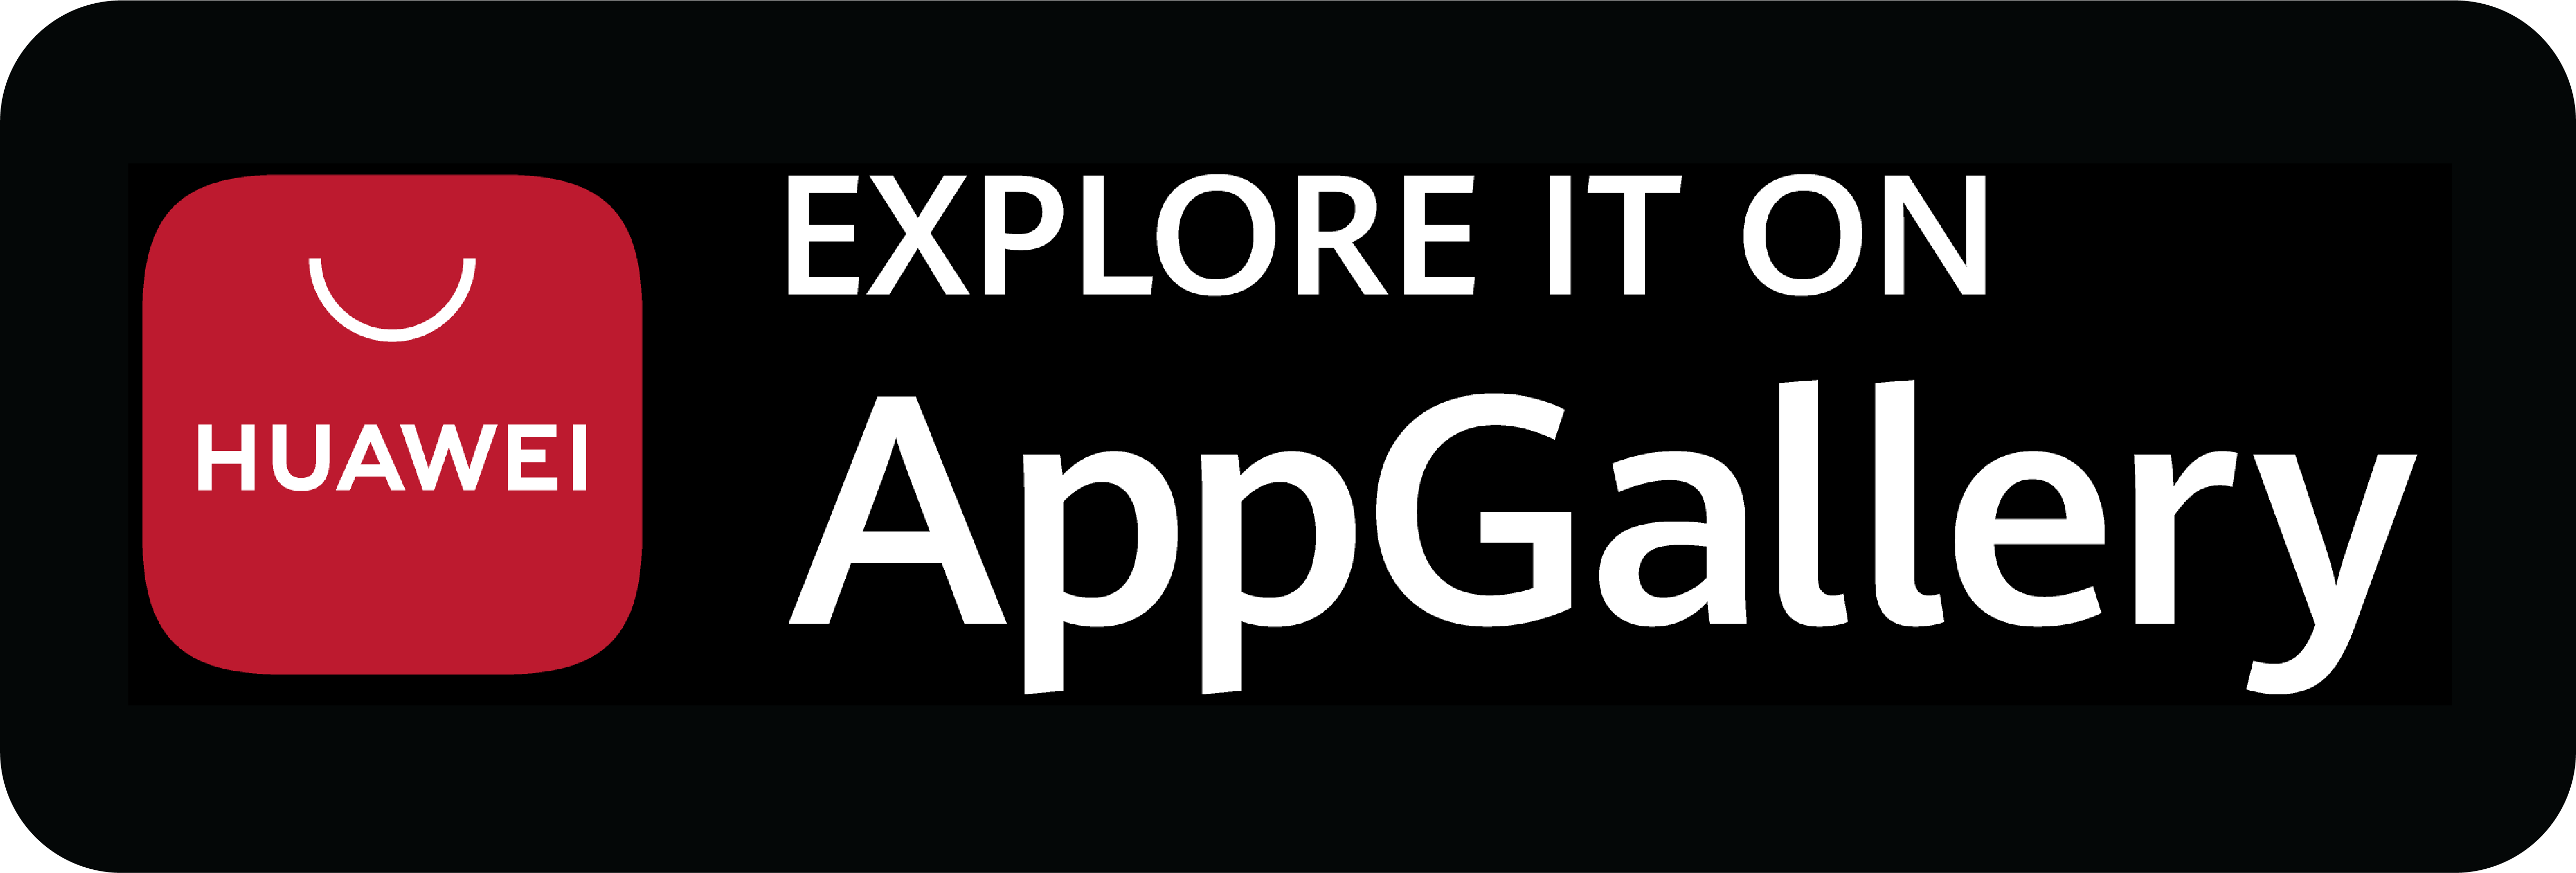 Available in your area. Доступно в app Gallery. App Gallery логотип. Откройте в app Gallery. Загрузите в app Gallery.